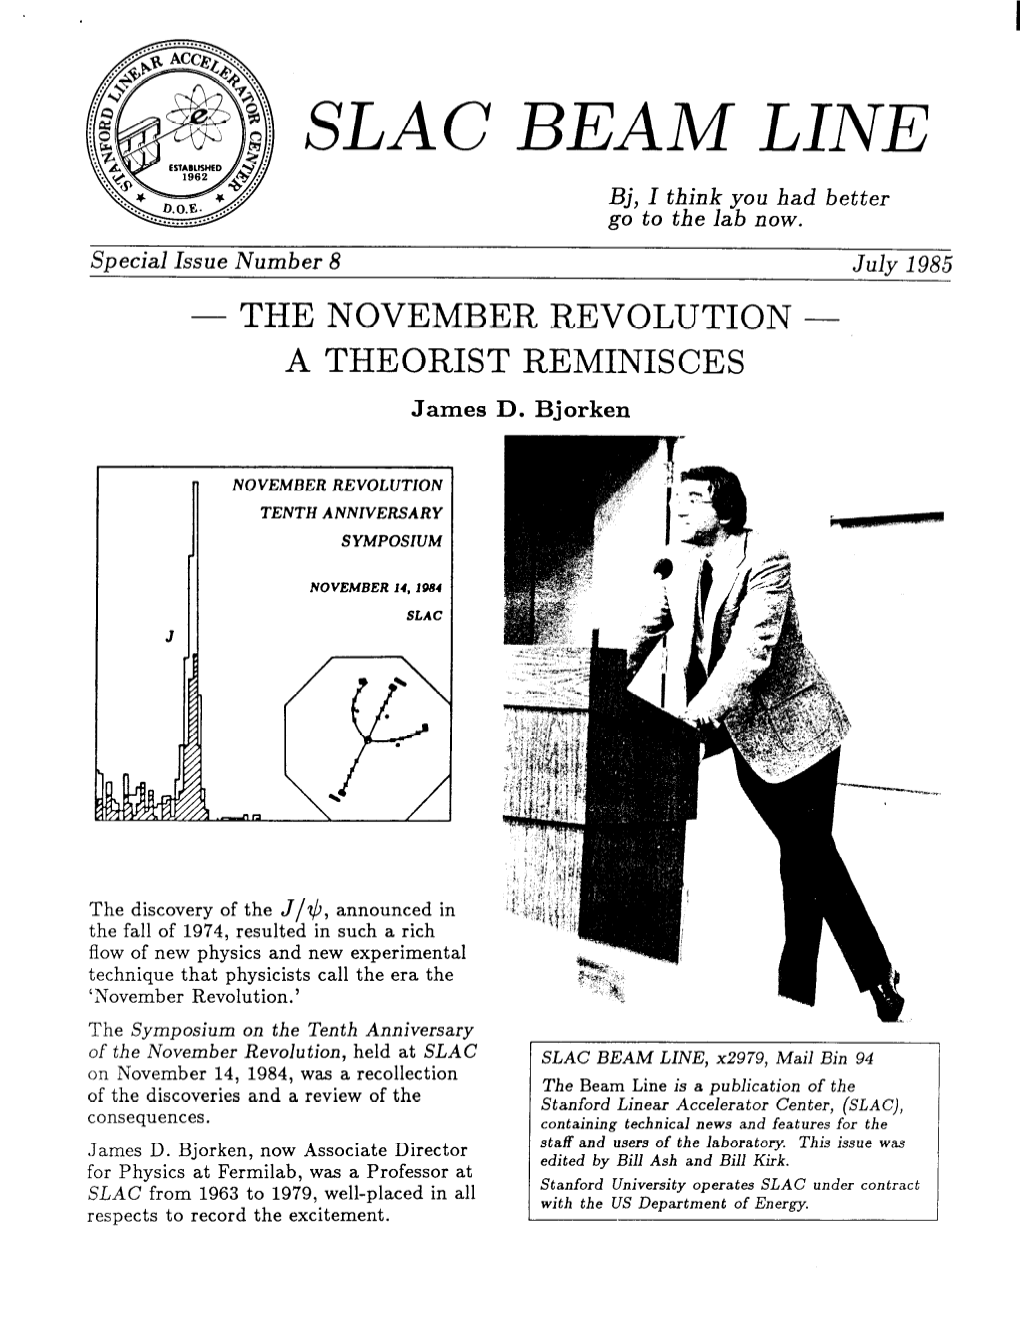 THE NOVEMBER REVOLUTION - a THEORIST REMINISCES James D